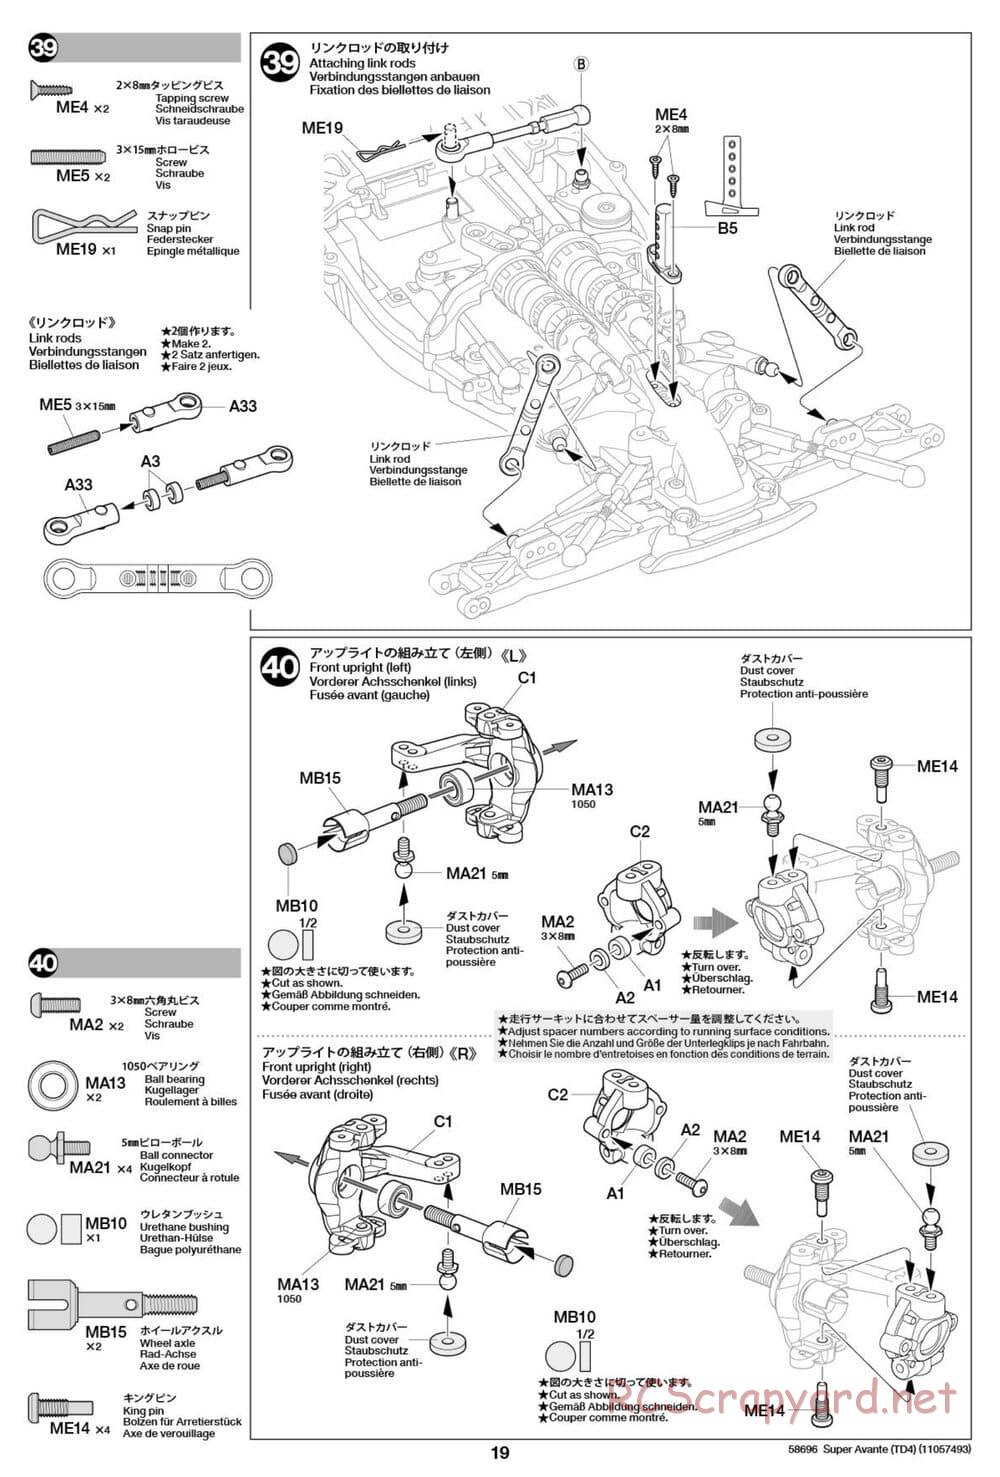 Tamiya - Super Avante - TD4 Chassis - Manual - Page 20